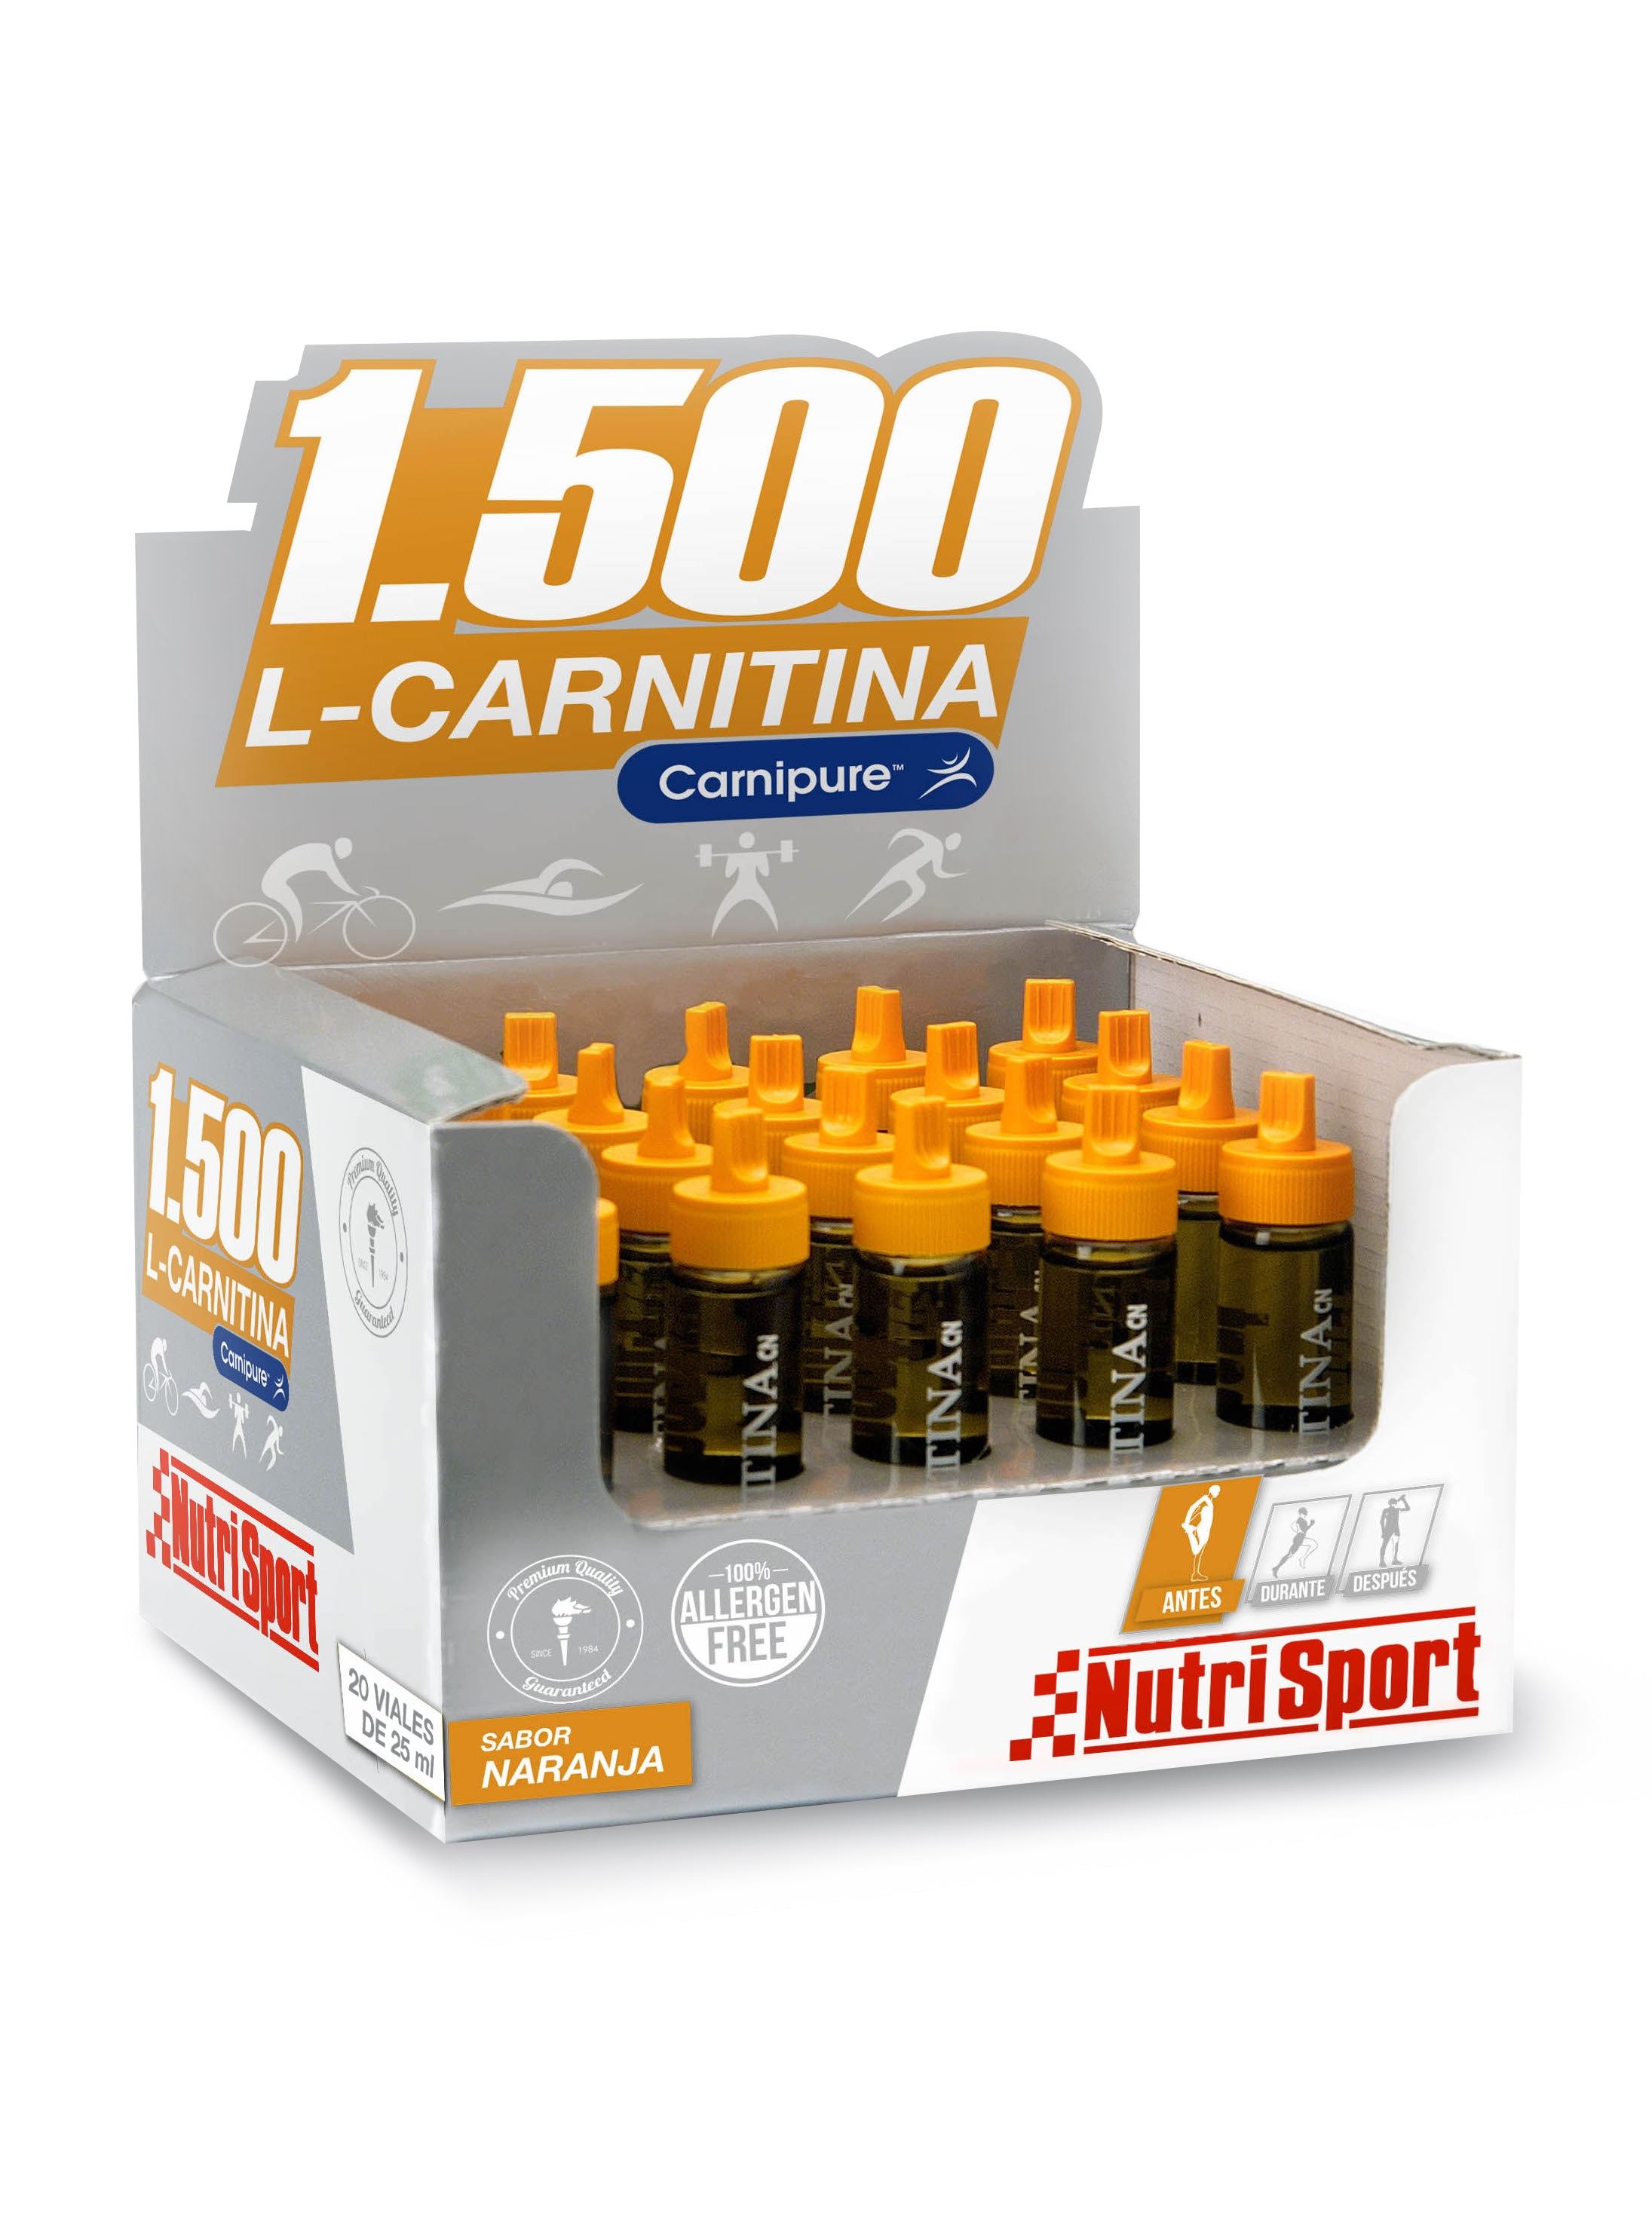 L-CARNITINA 1500 NARANJA 20Viales-NUTRISPORT